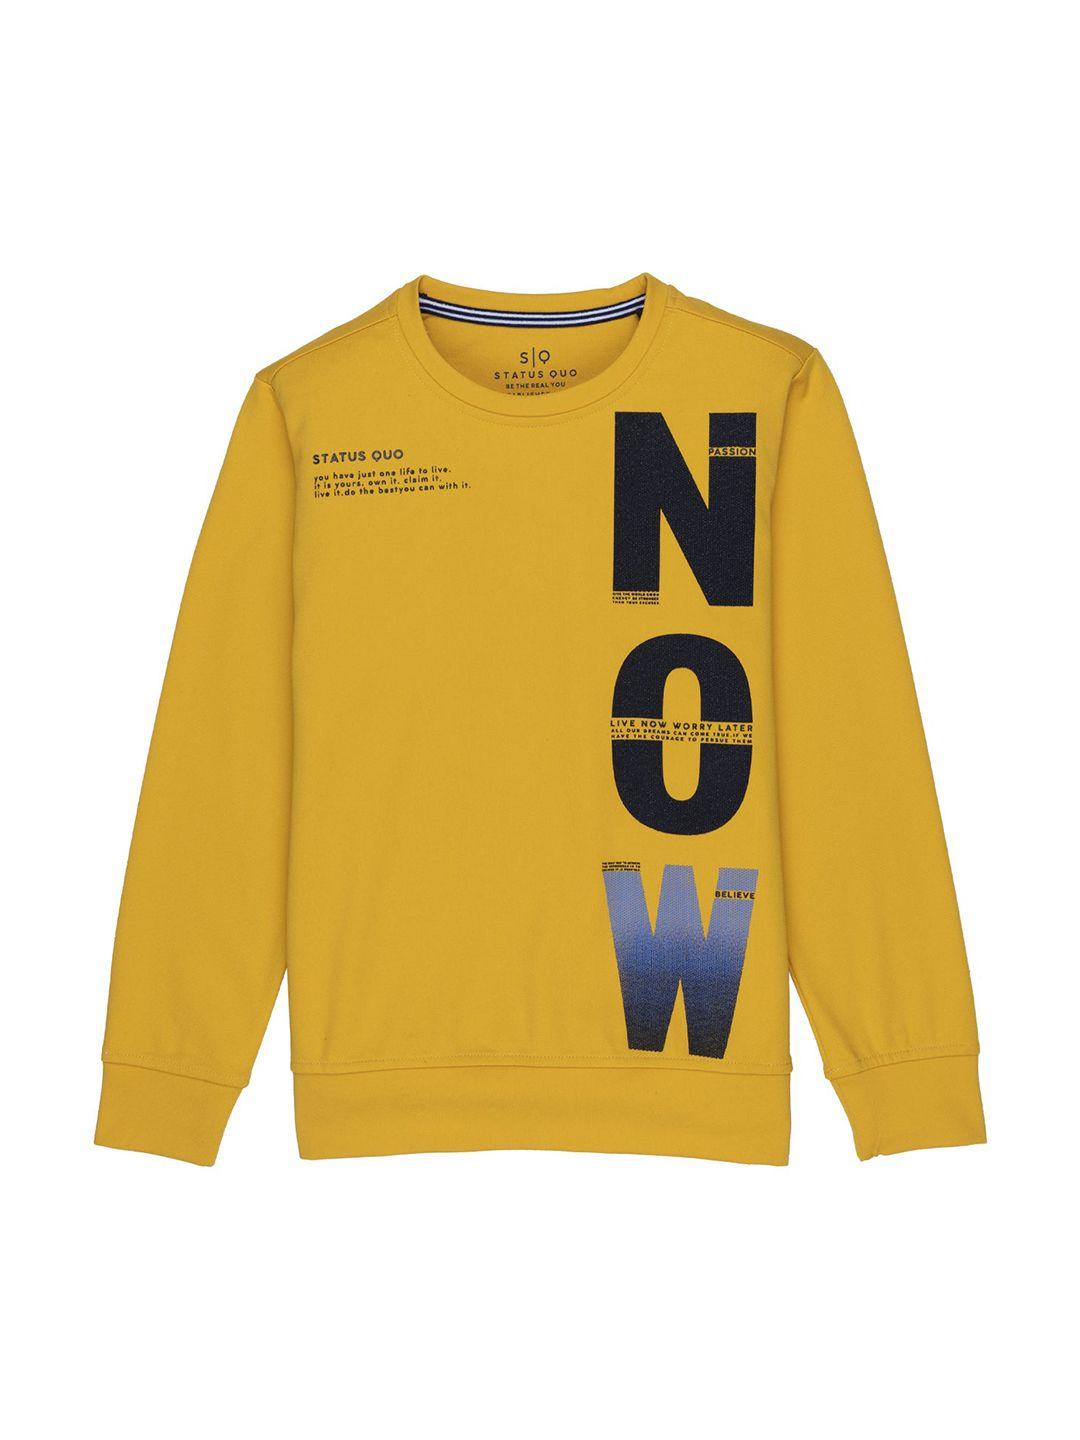 status quo boys gold-toned printed sweatshirt